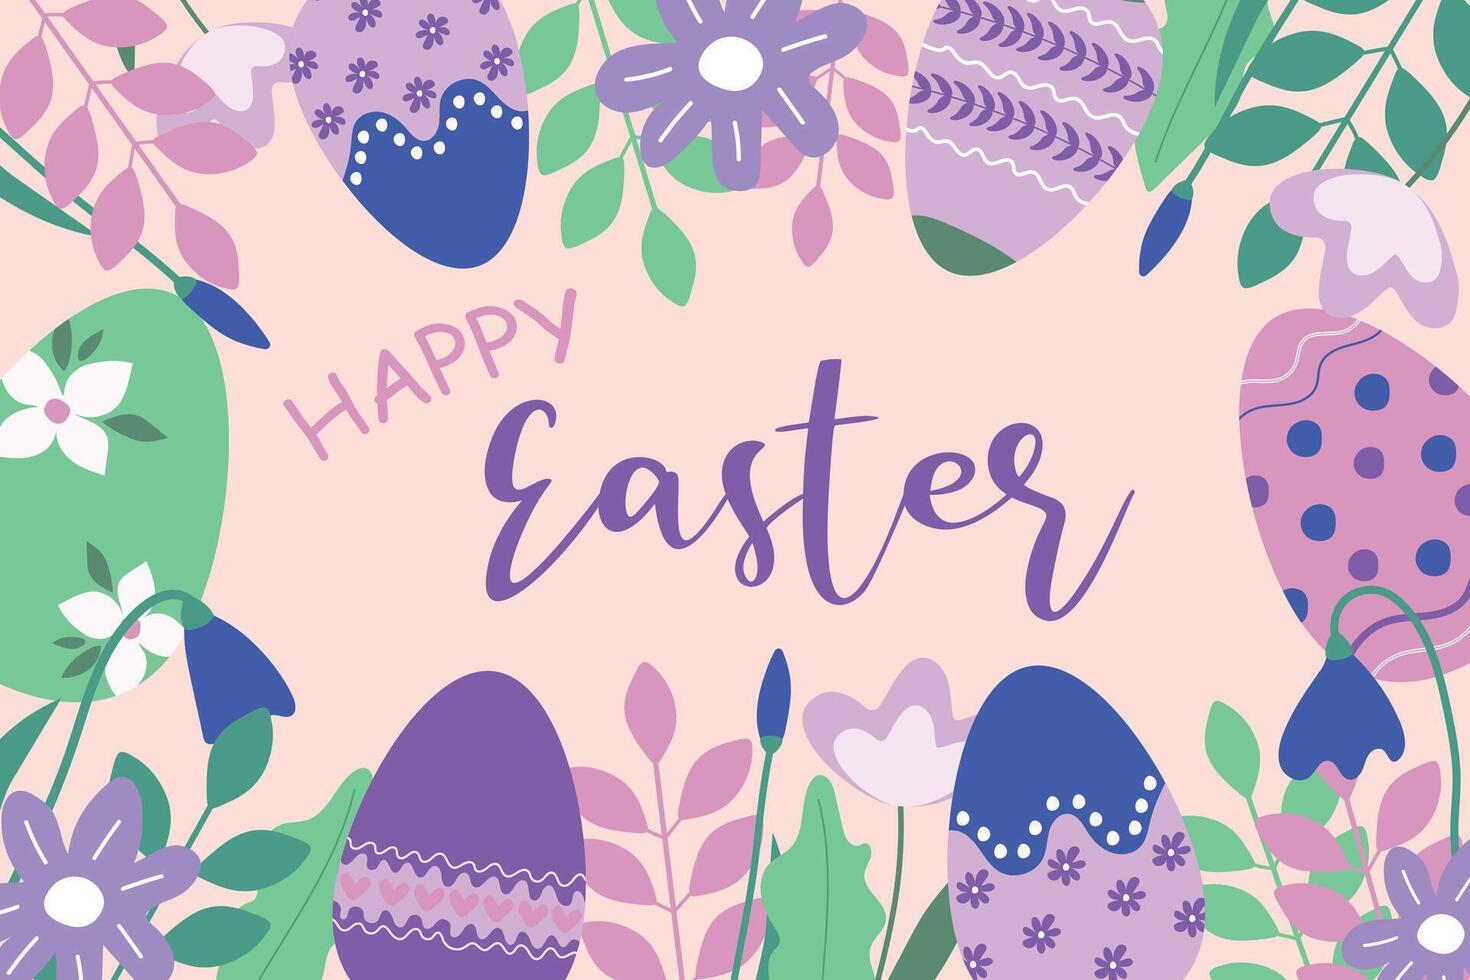 contento Pascua de Resurrección tarjeta con Pascua de Resurrección huevos y creativo flores contento Pascua de Resurrección. vector